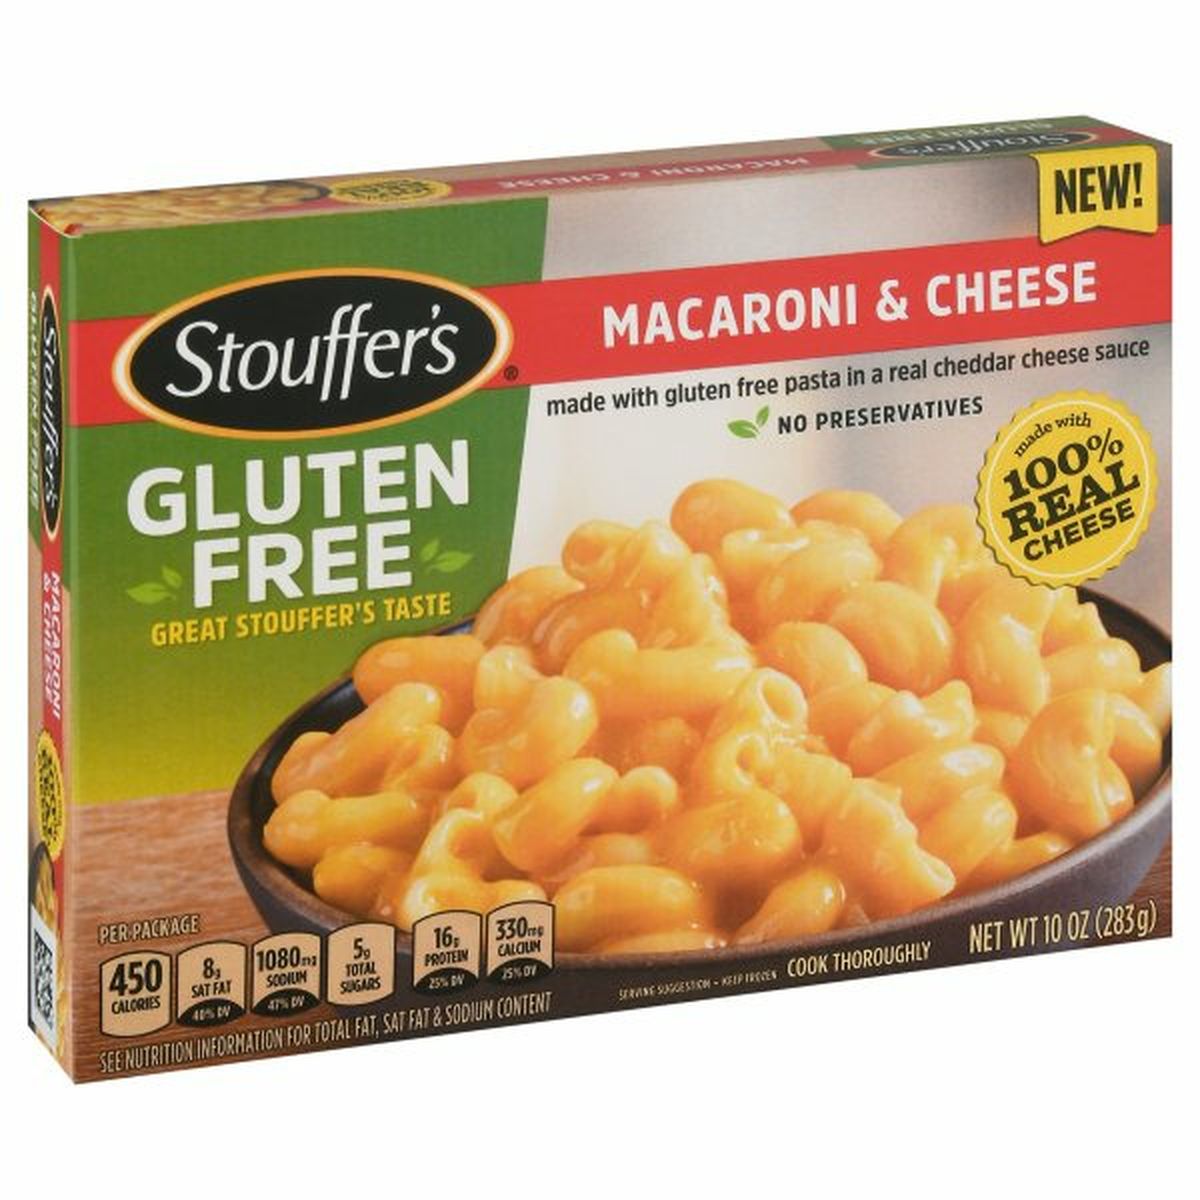 Calories in Stouffer's Macaroni & Cheese, Gluten Free